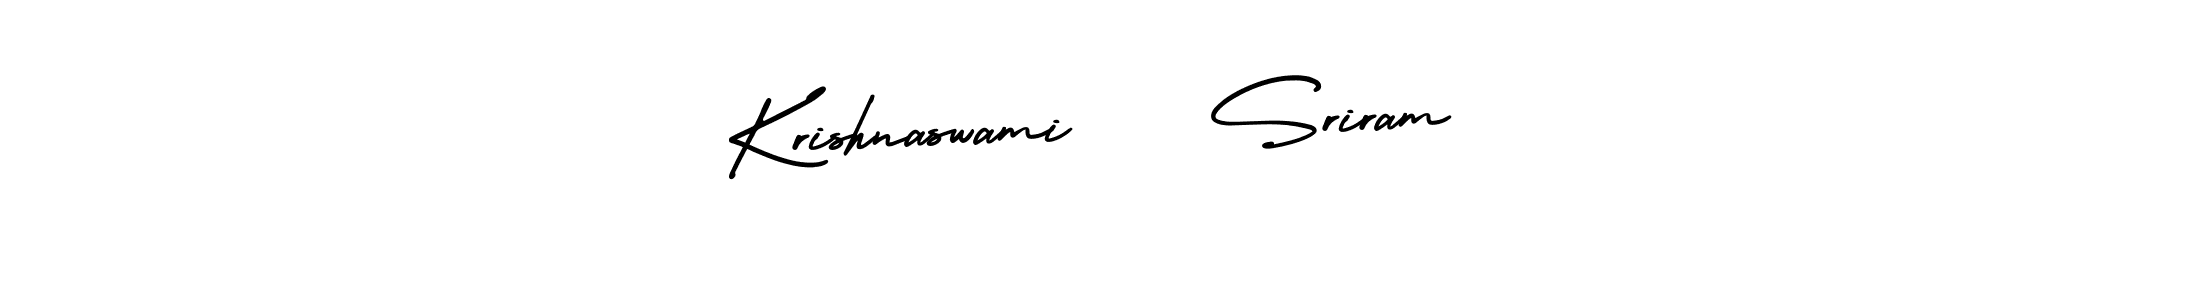 Design your own signature with our free online signature maker. With this signature software, you can create a handwritten (AmerikaSignatureDemo-Regular) signature for name Krishnaswami    Sriram. Krishnaswami    Sriram signature style 3 images and pictures png